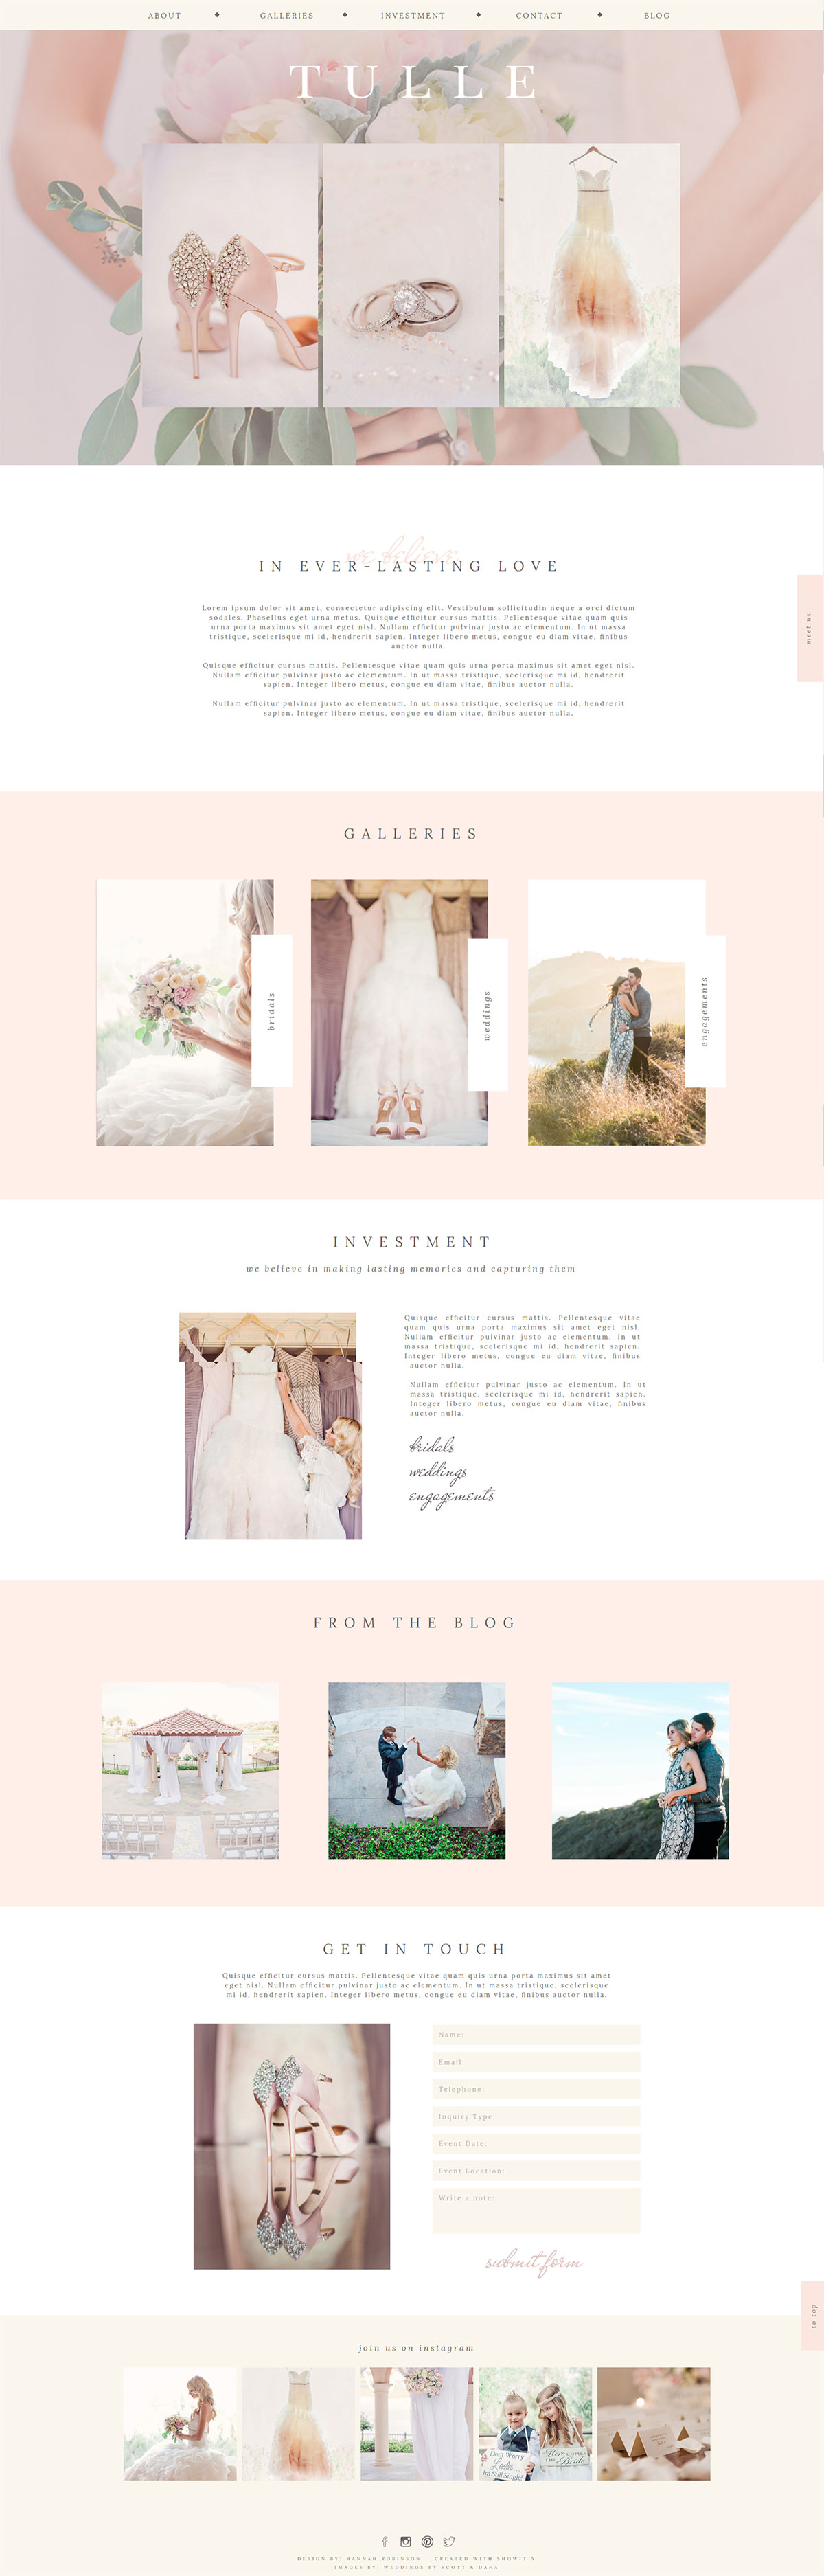 feminine wedding photographer website design by hannah robinson